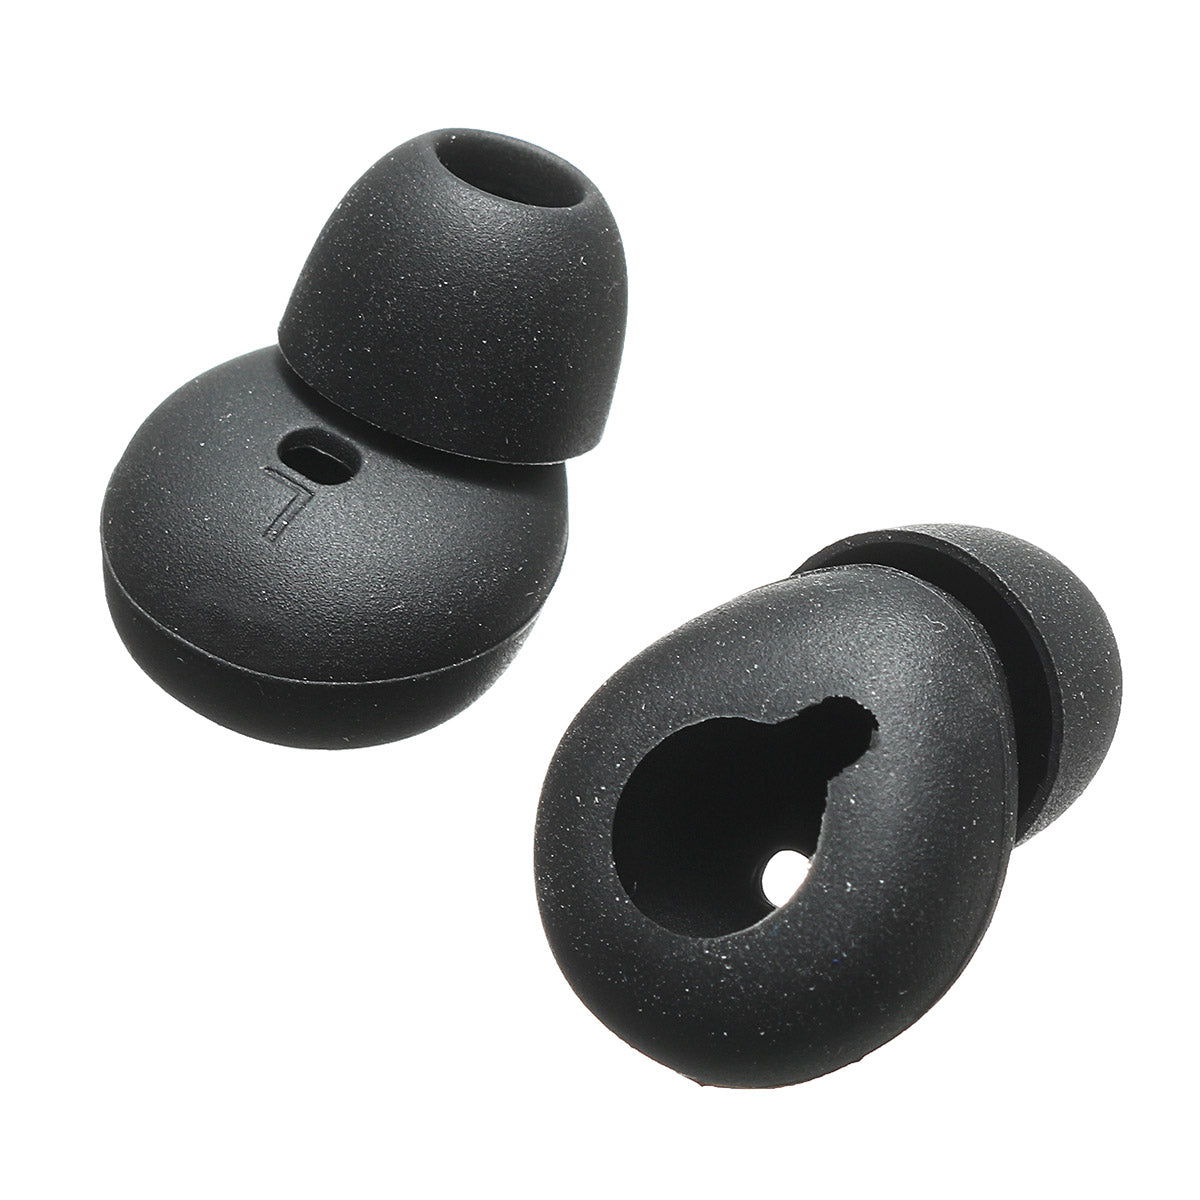 Samsung Gear 1 Pair Replacement Earphone Earbuds Cover for Samsung Gear Circle Earphone Headphone